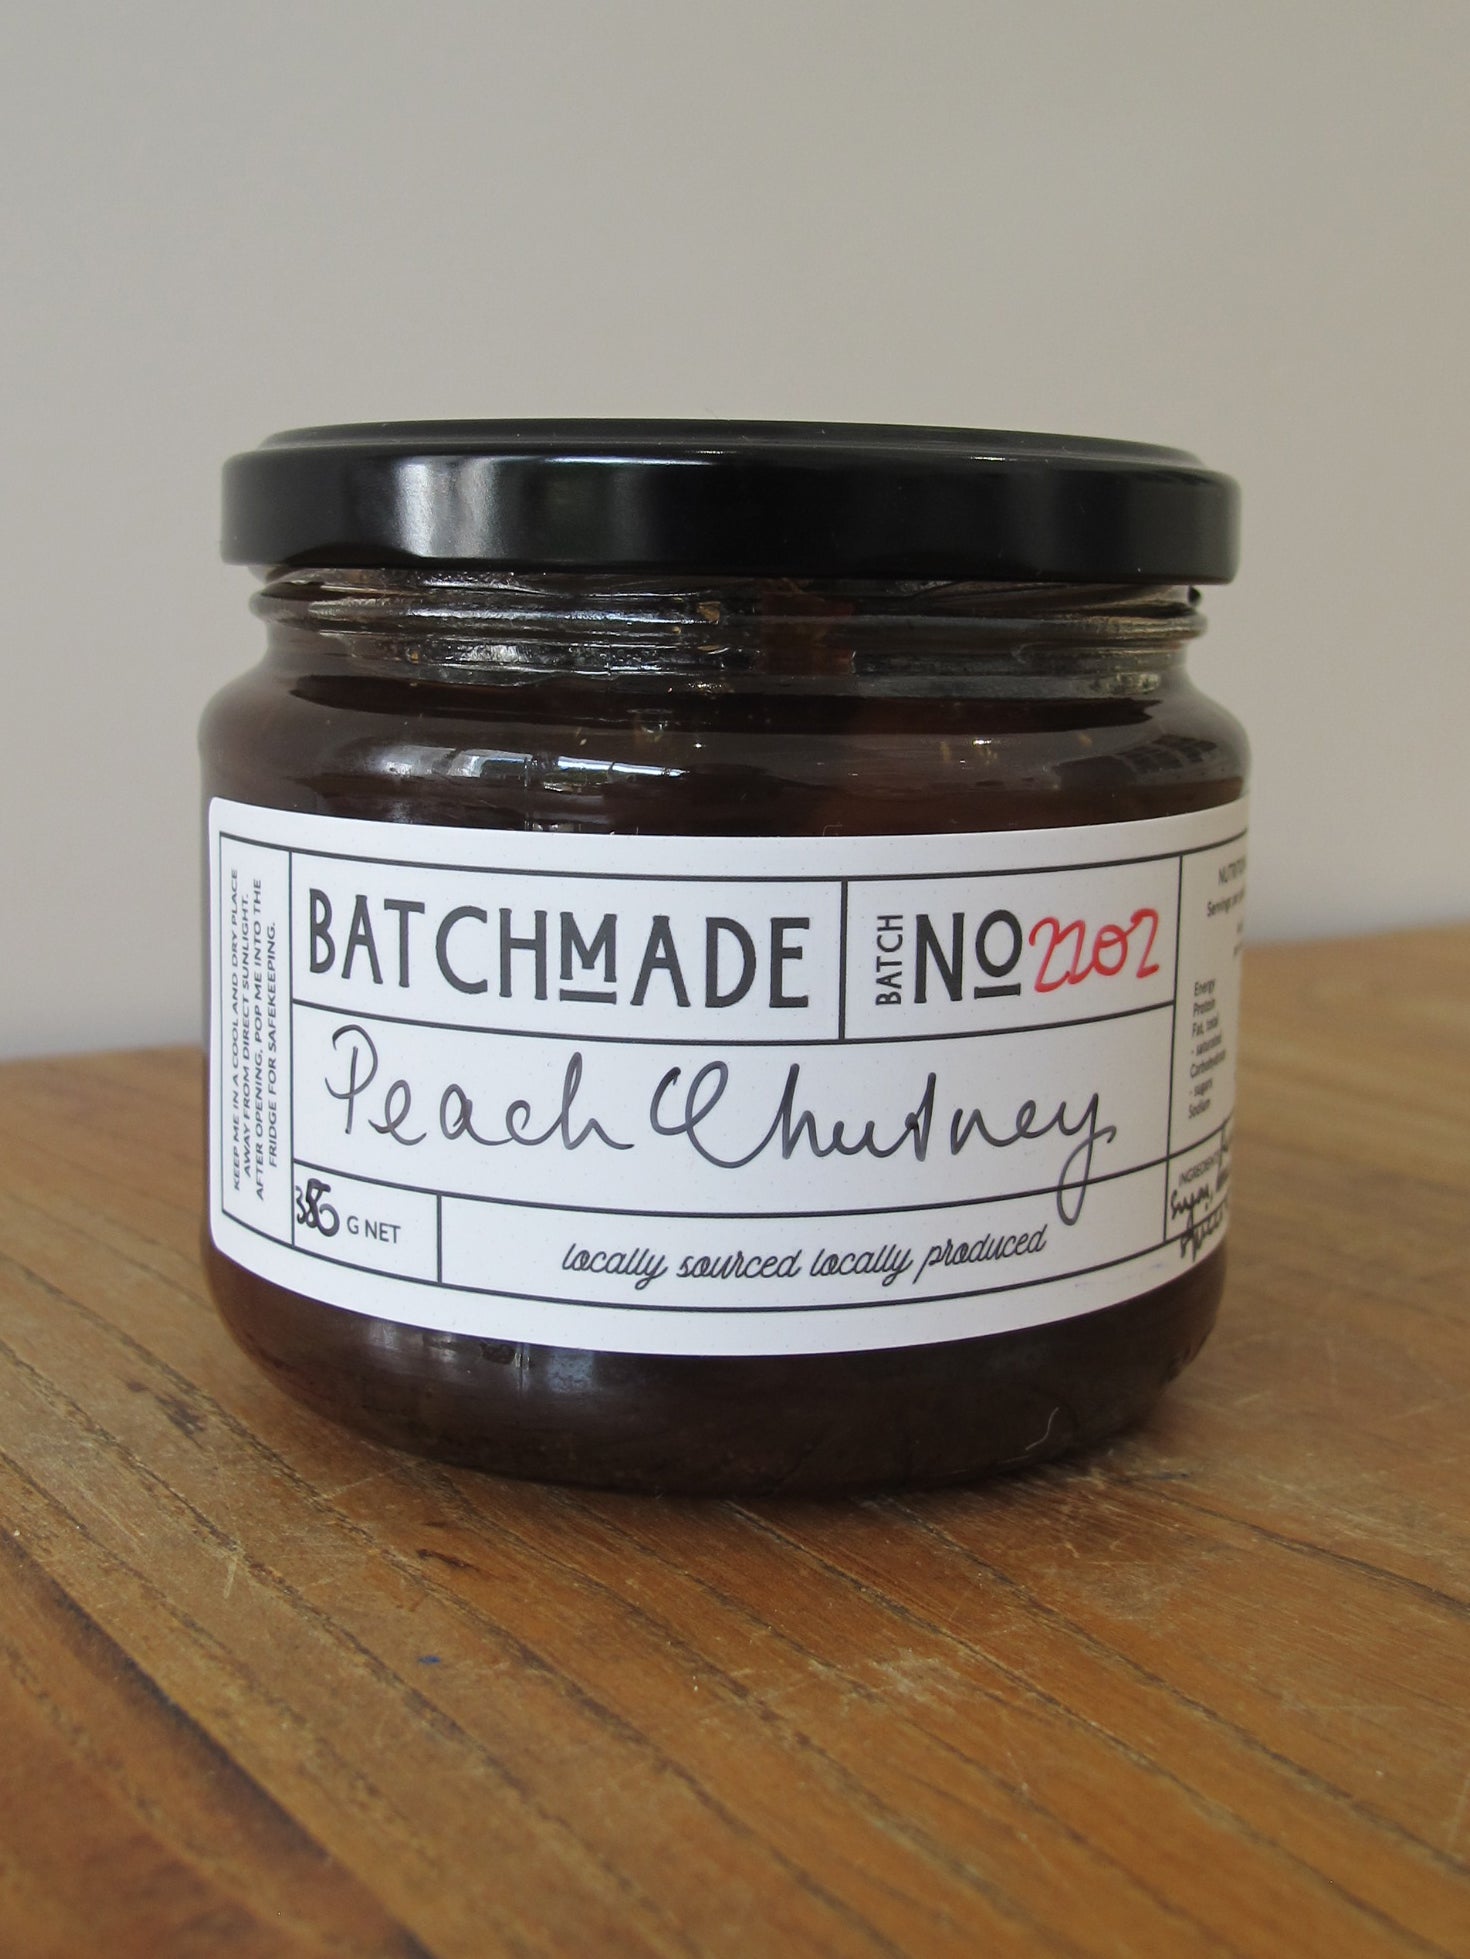 Jar of BatchMade Peach chutney